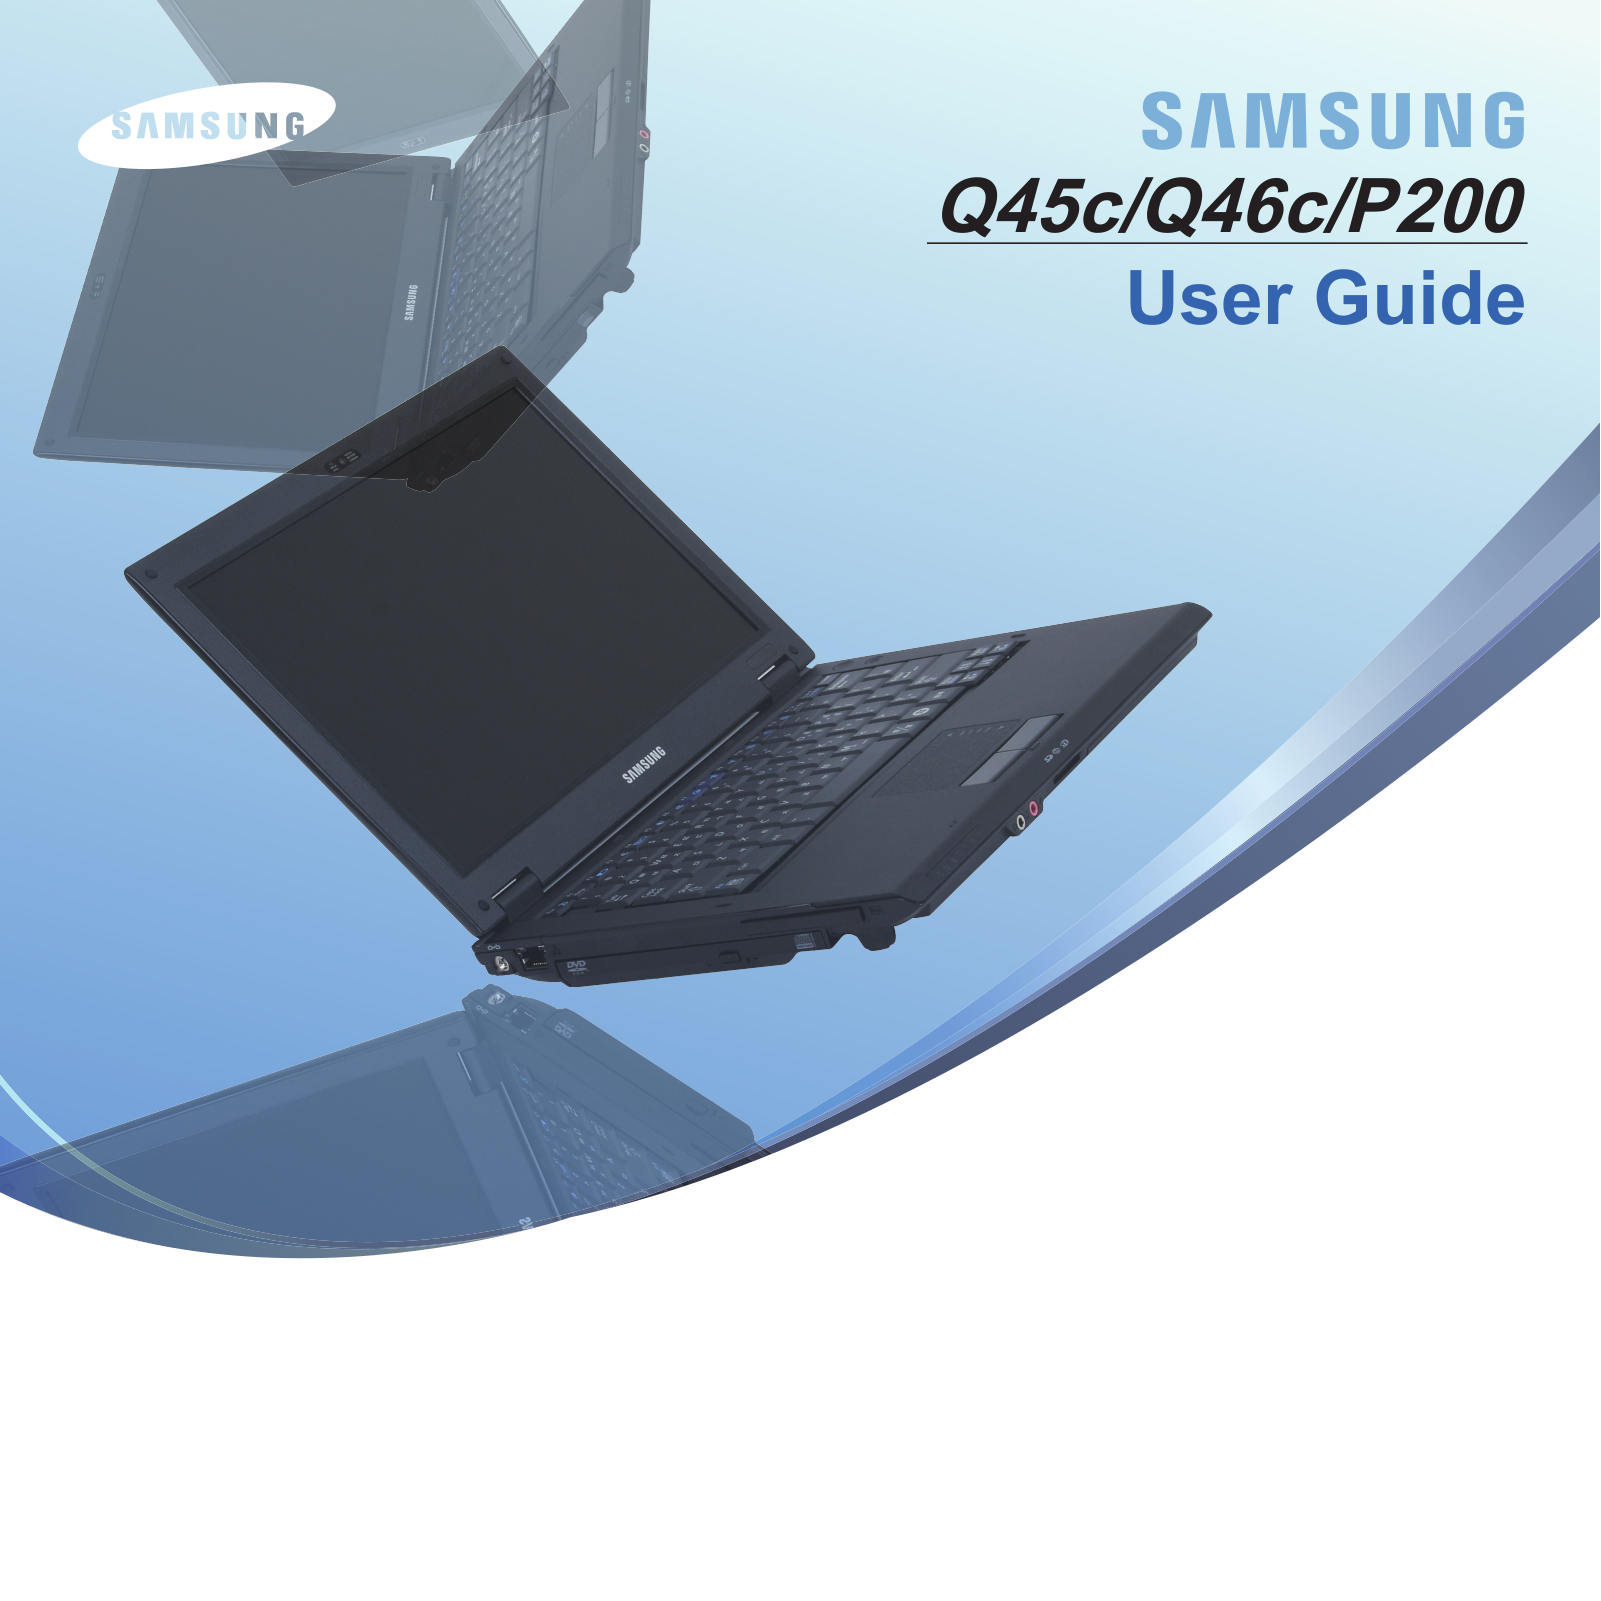 Samsung Q45-XY04 User Manual